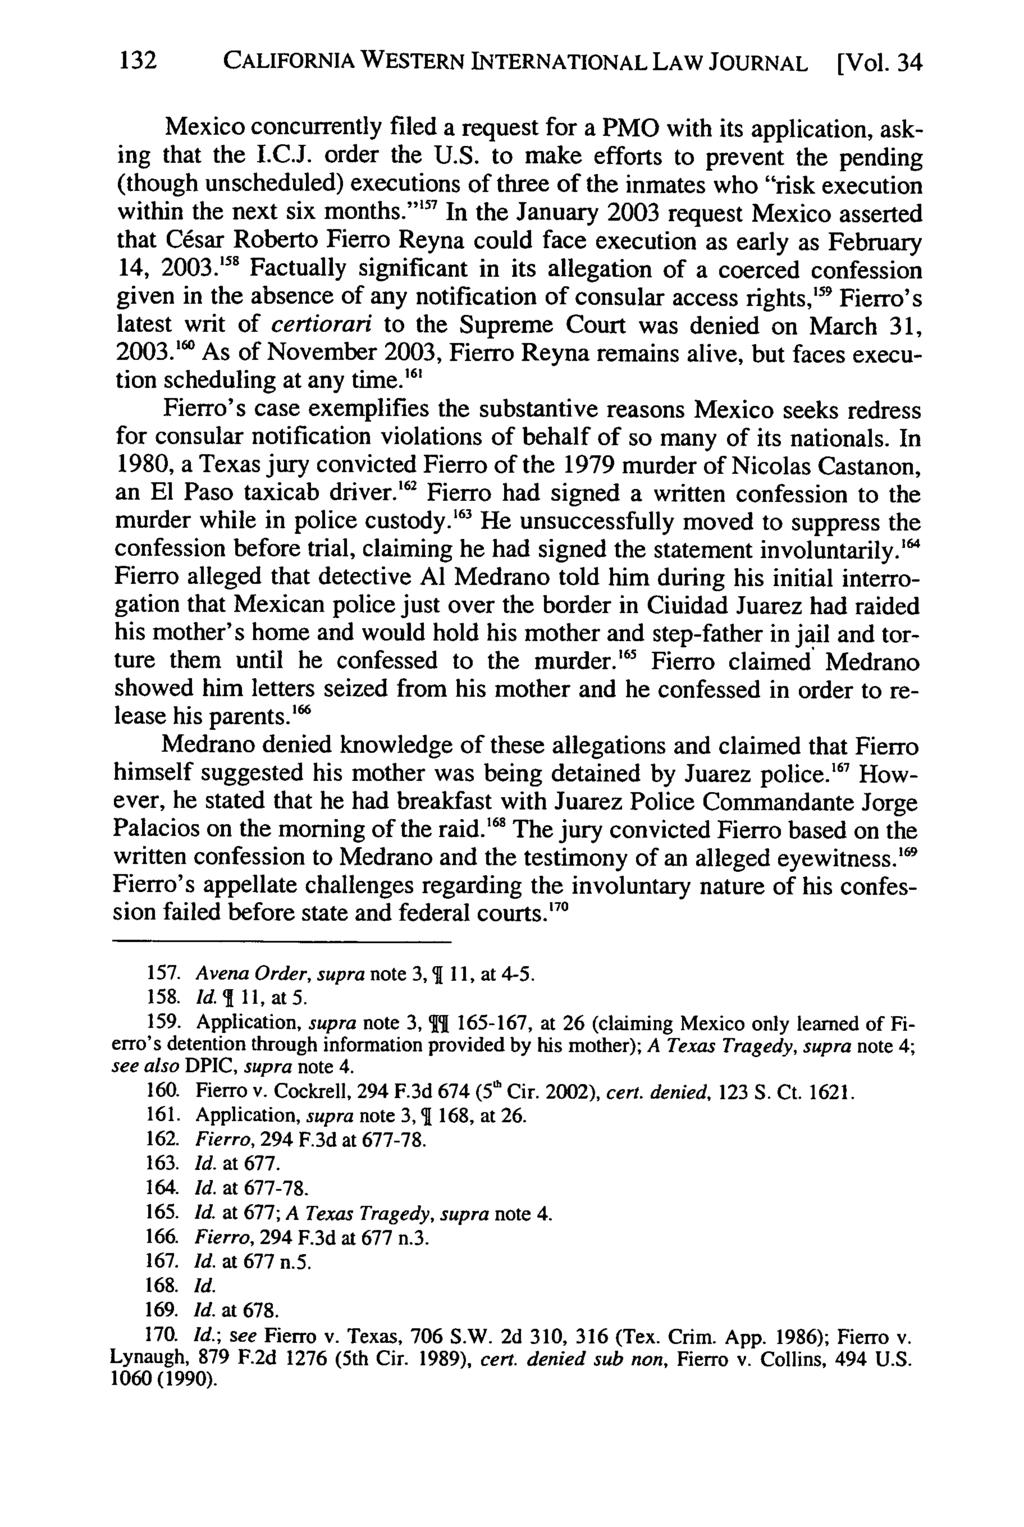 132 California CALIFORNIA Western International WESTERN Law INTERNATIONAL Journal, Vol. 34 LAW [2003], JOURNAL No. 1, Art. [Vol.